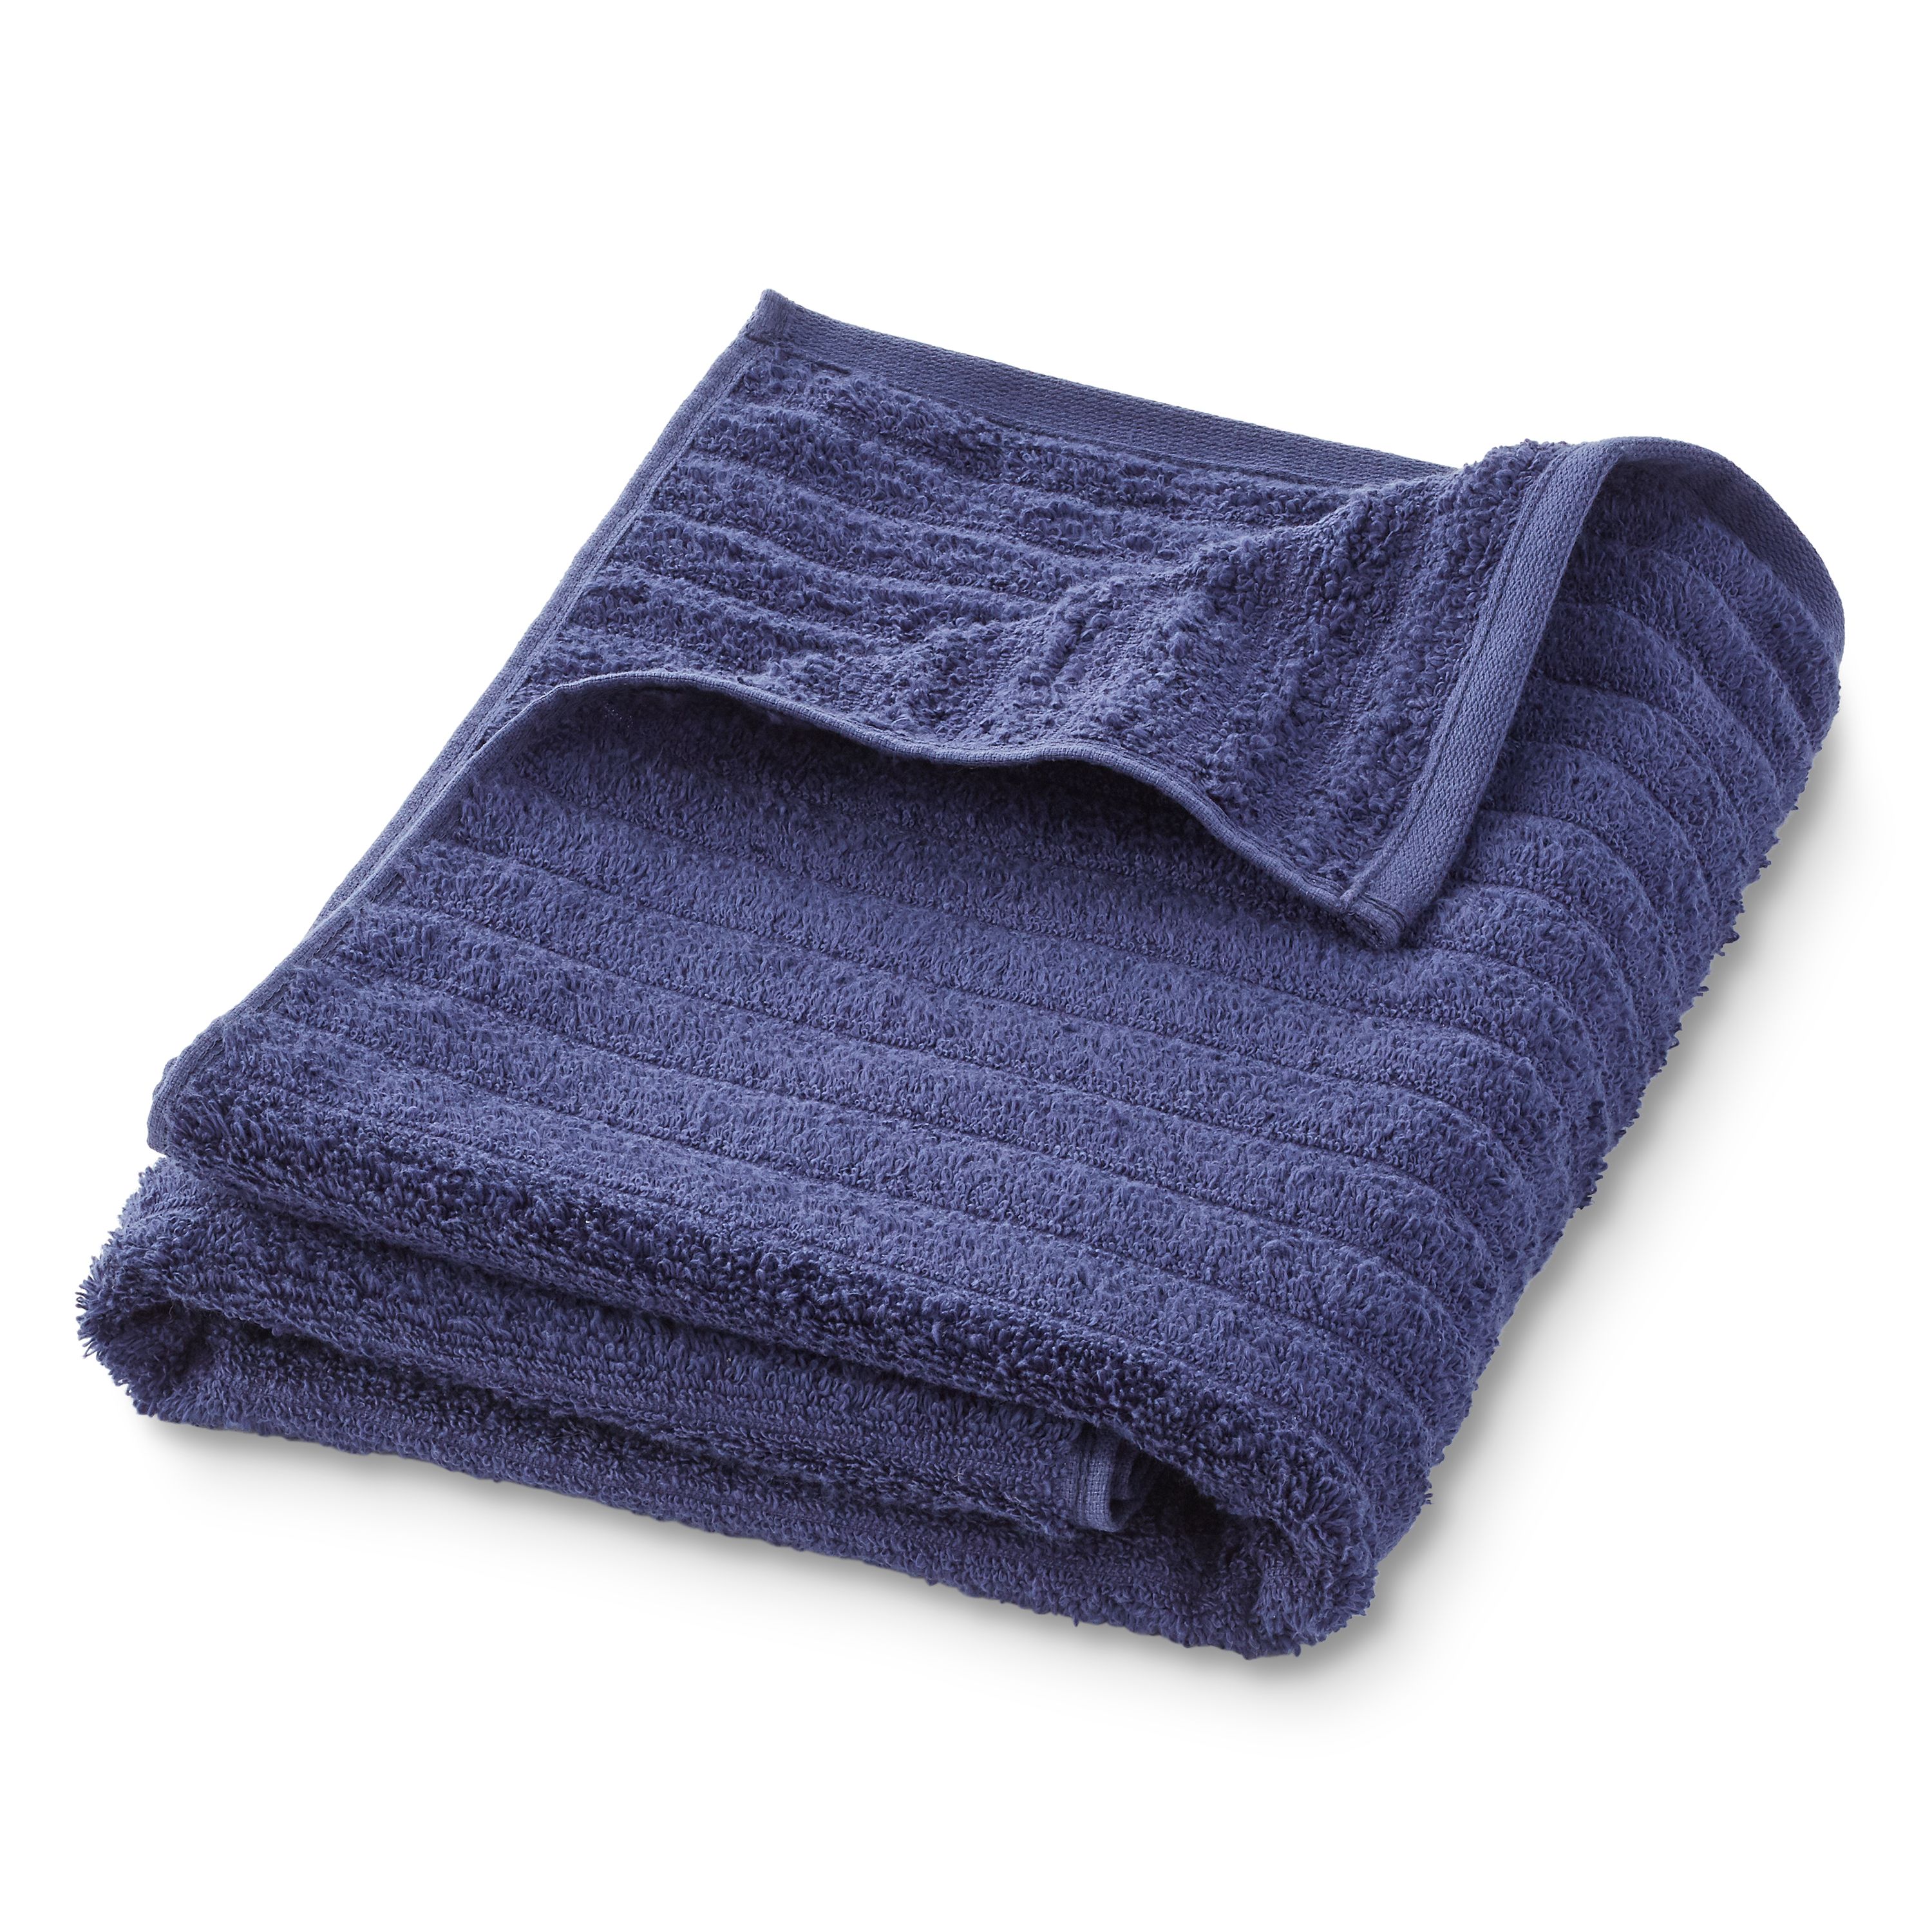 Mainstays Performance Mix Textured 6-Piece Bath Towel Set - Navy Blue - image 6 of 9